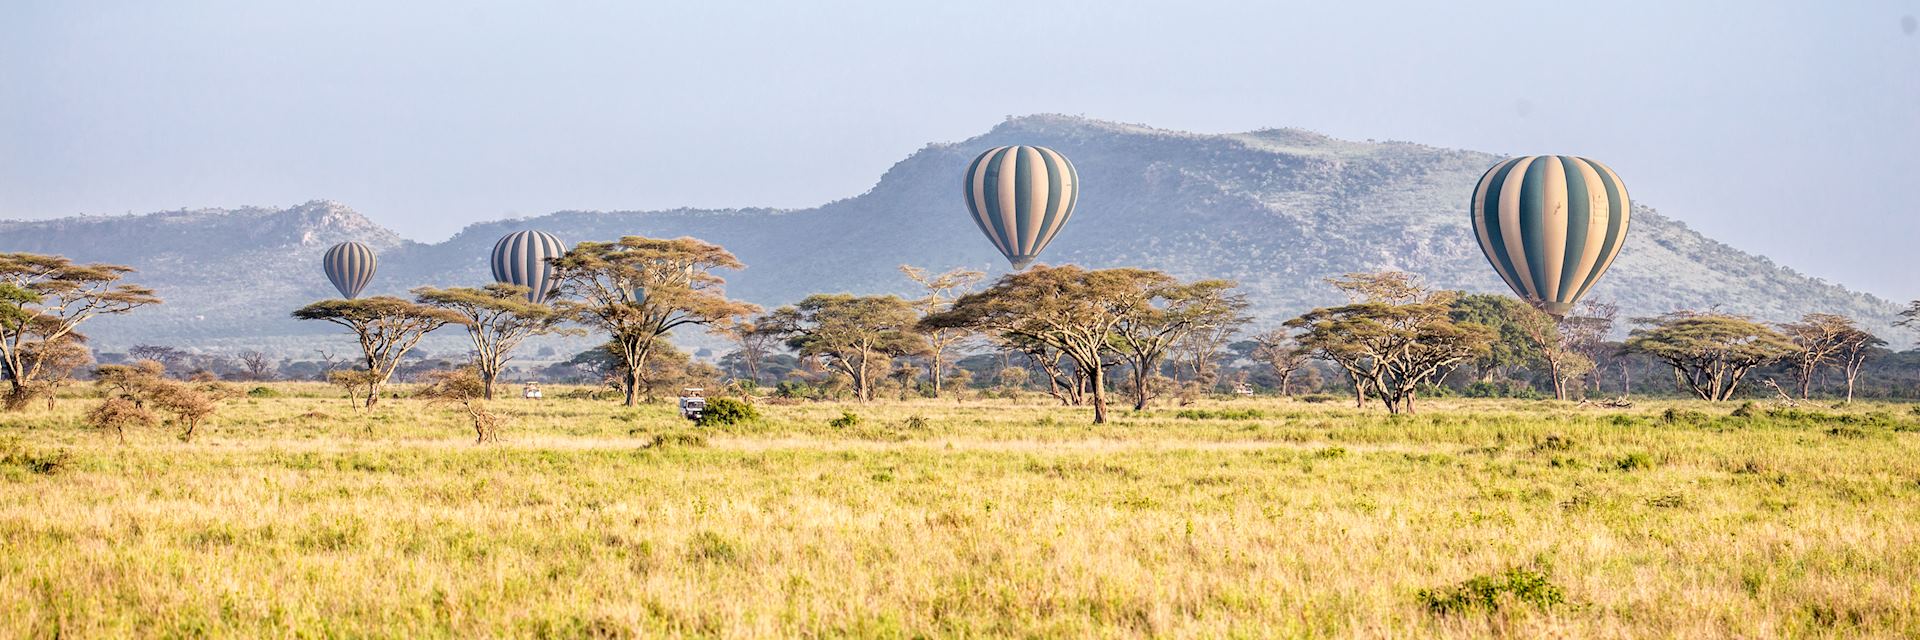 Balloons over the Serengeti National Park